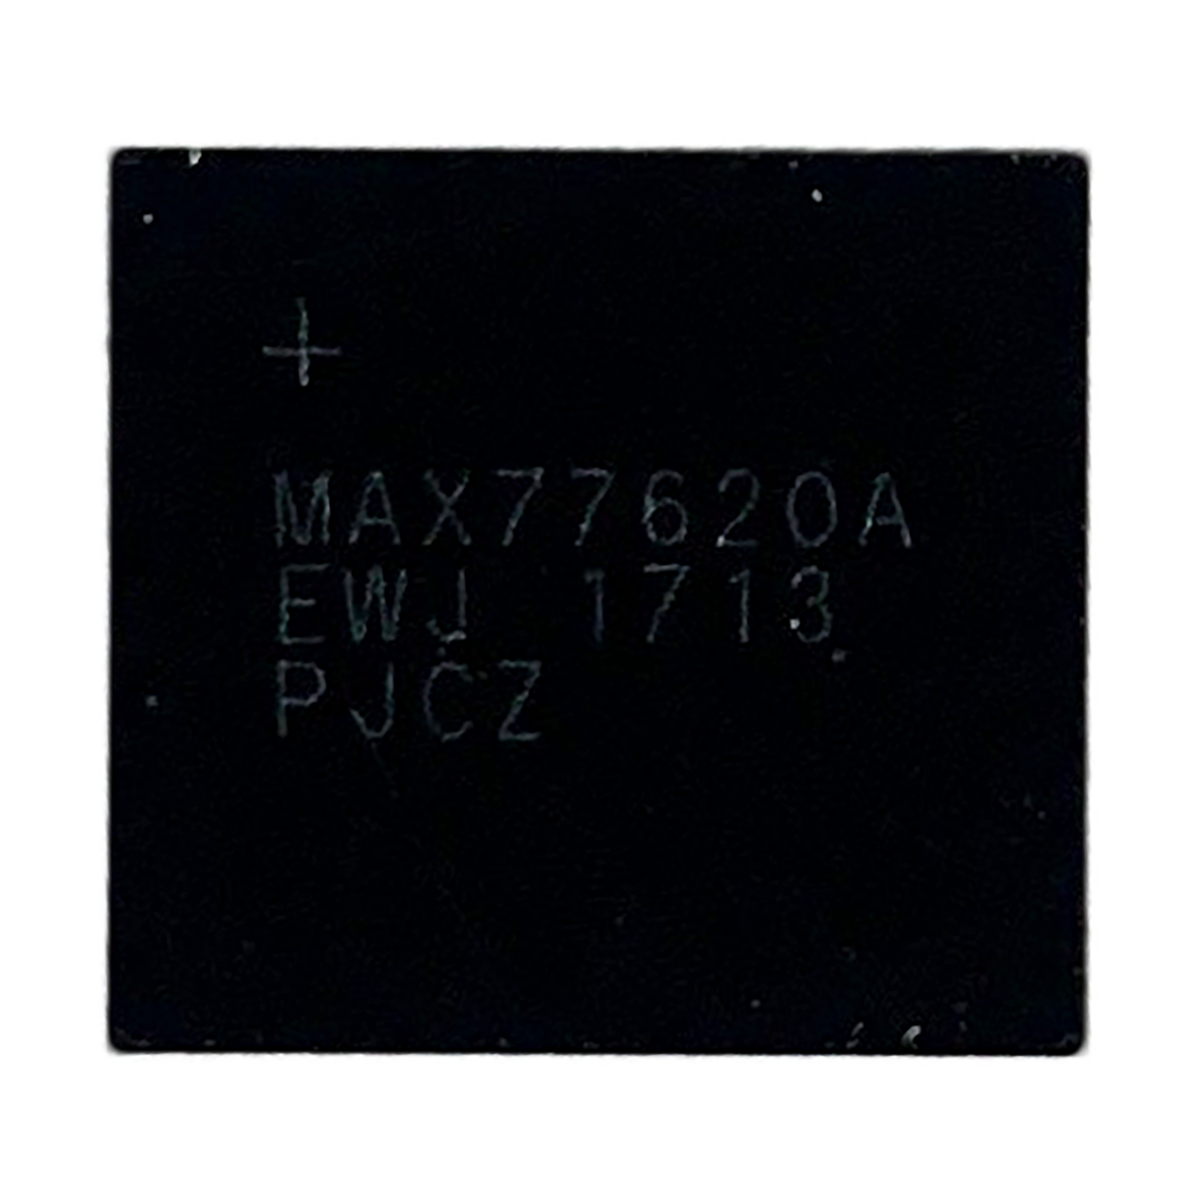 Nintendo Switch Power Management IC (PMIC) (MAX77620AEWJ+T)